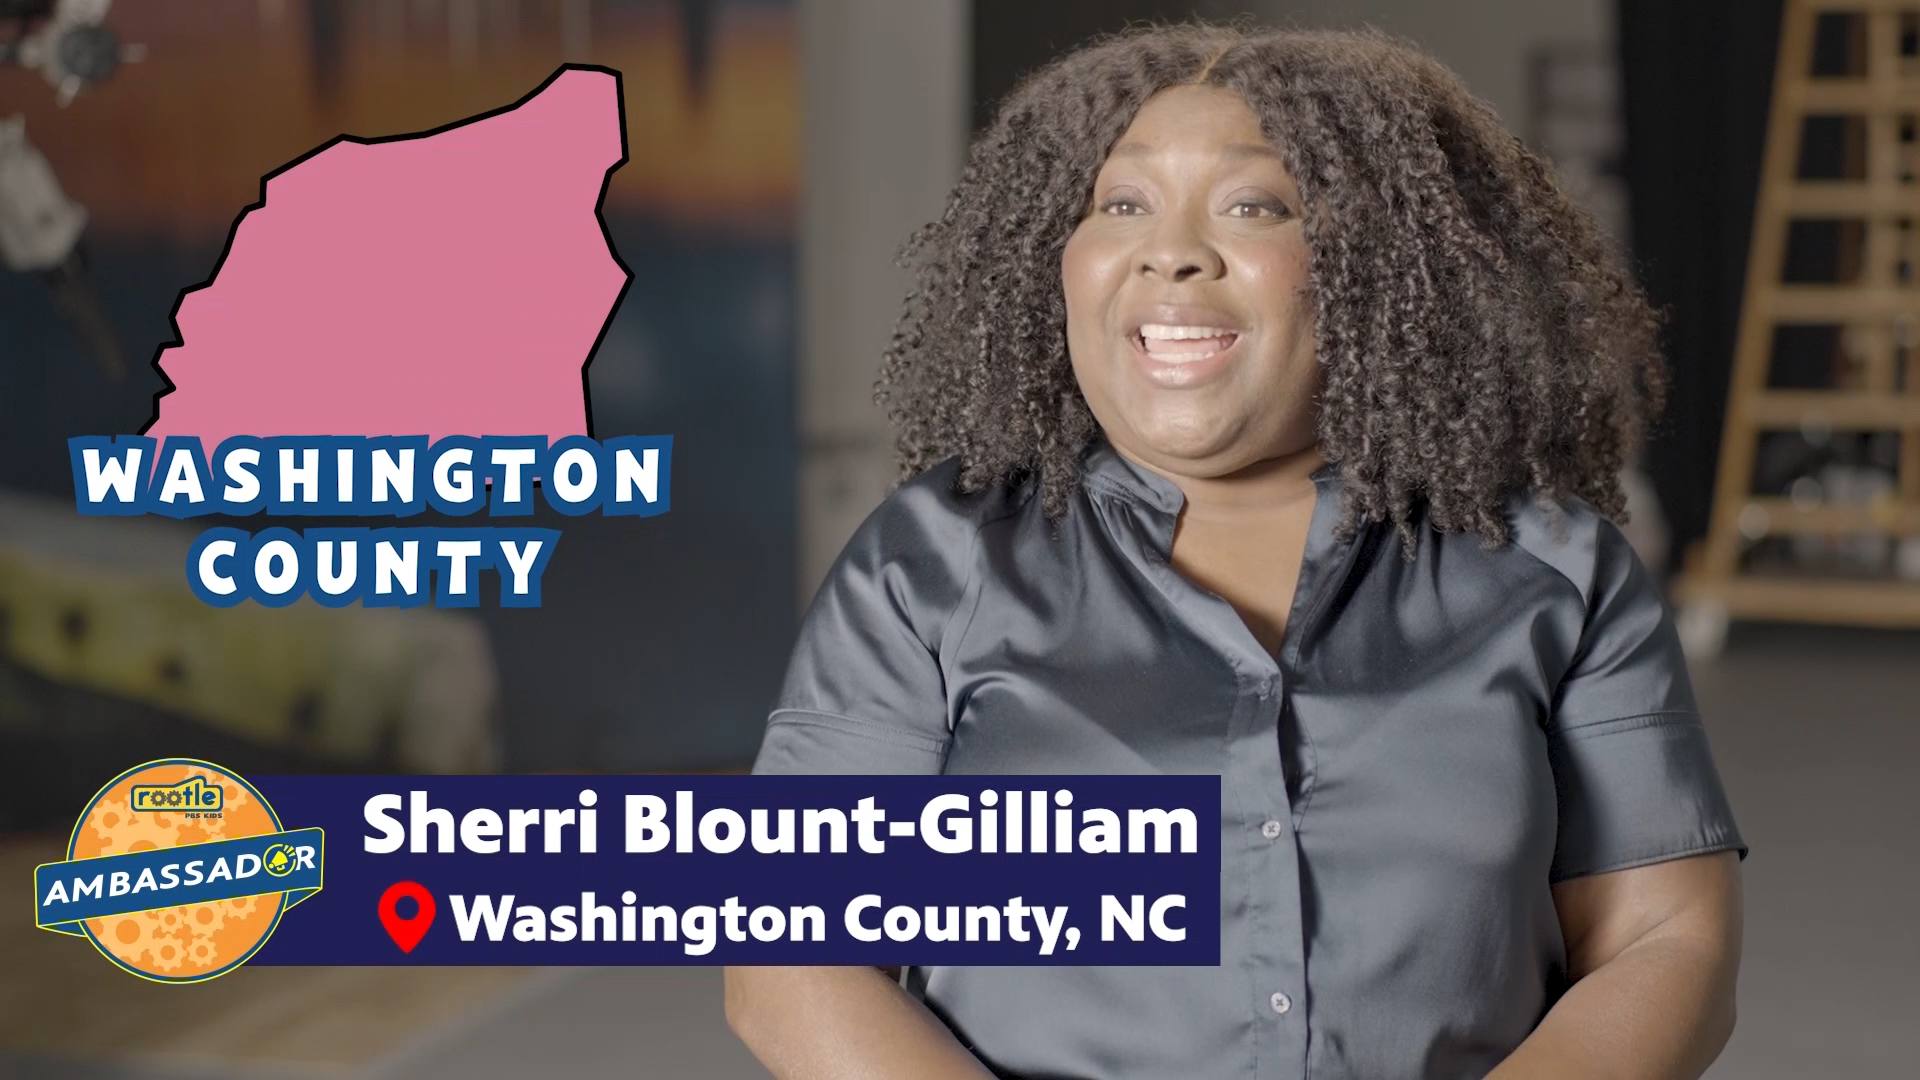 Meet Sherri Blount-Gilliam, Washington County Rootle Ambassador